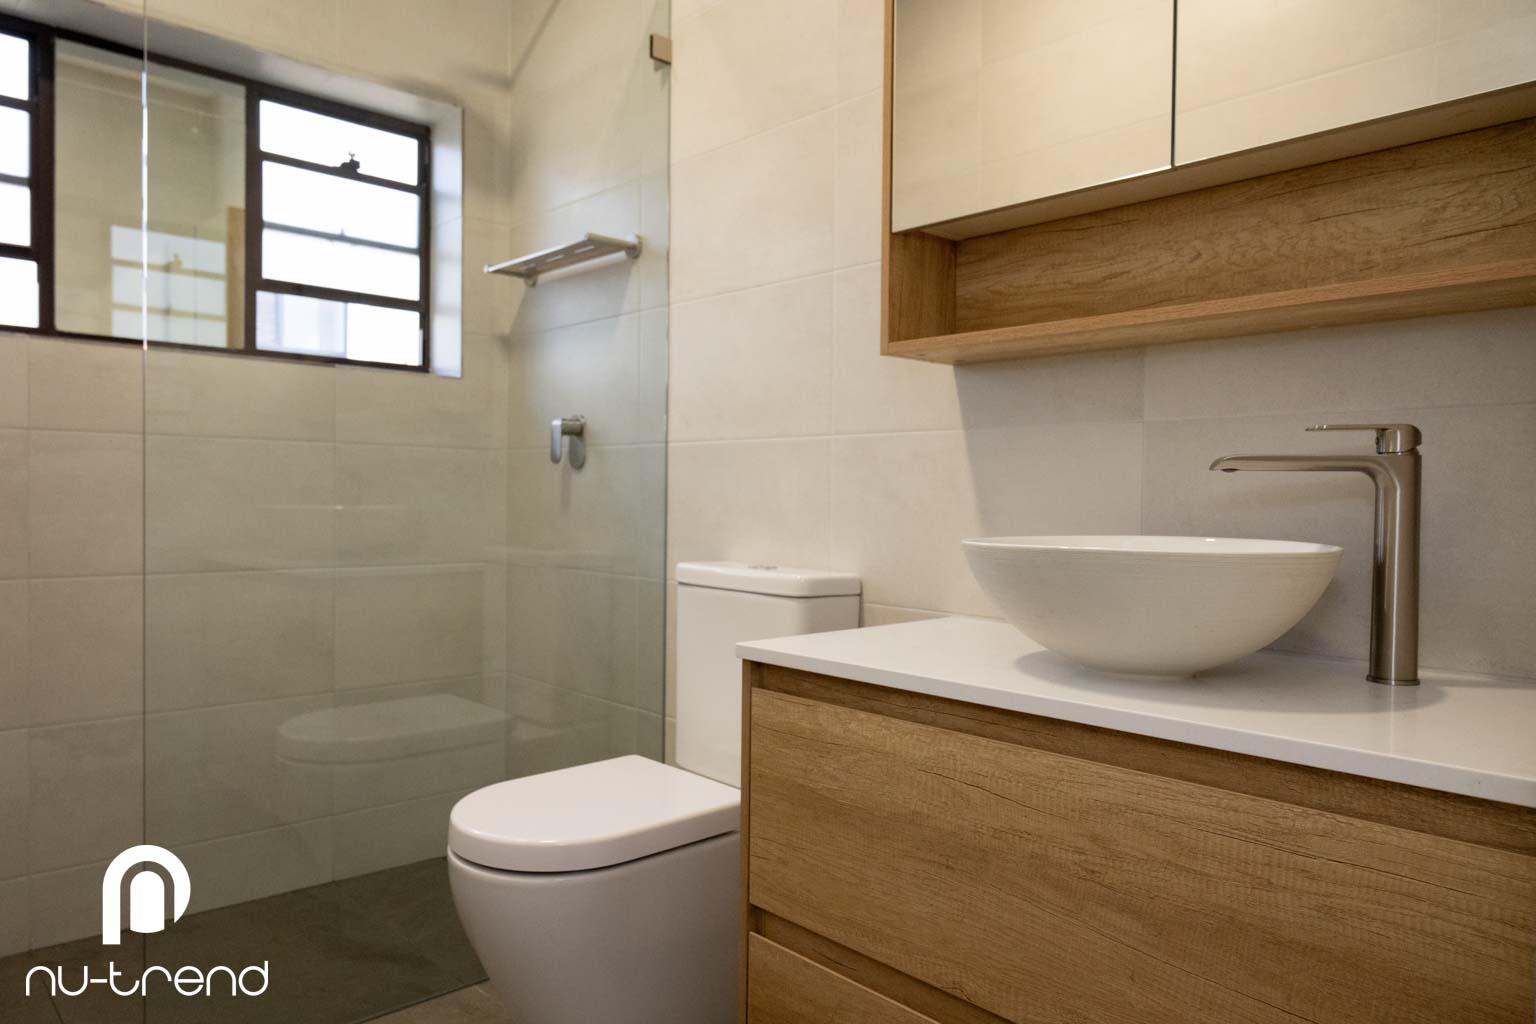 Complete bathroom renovation Maroubra Sydney new toilet and shower